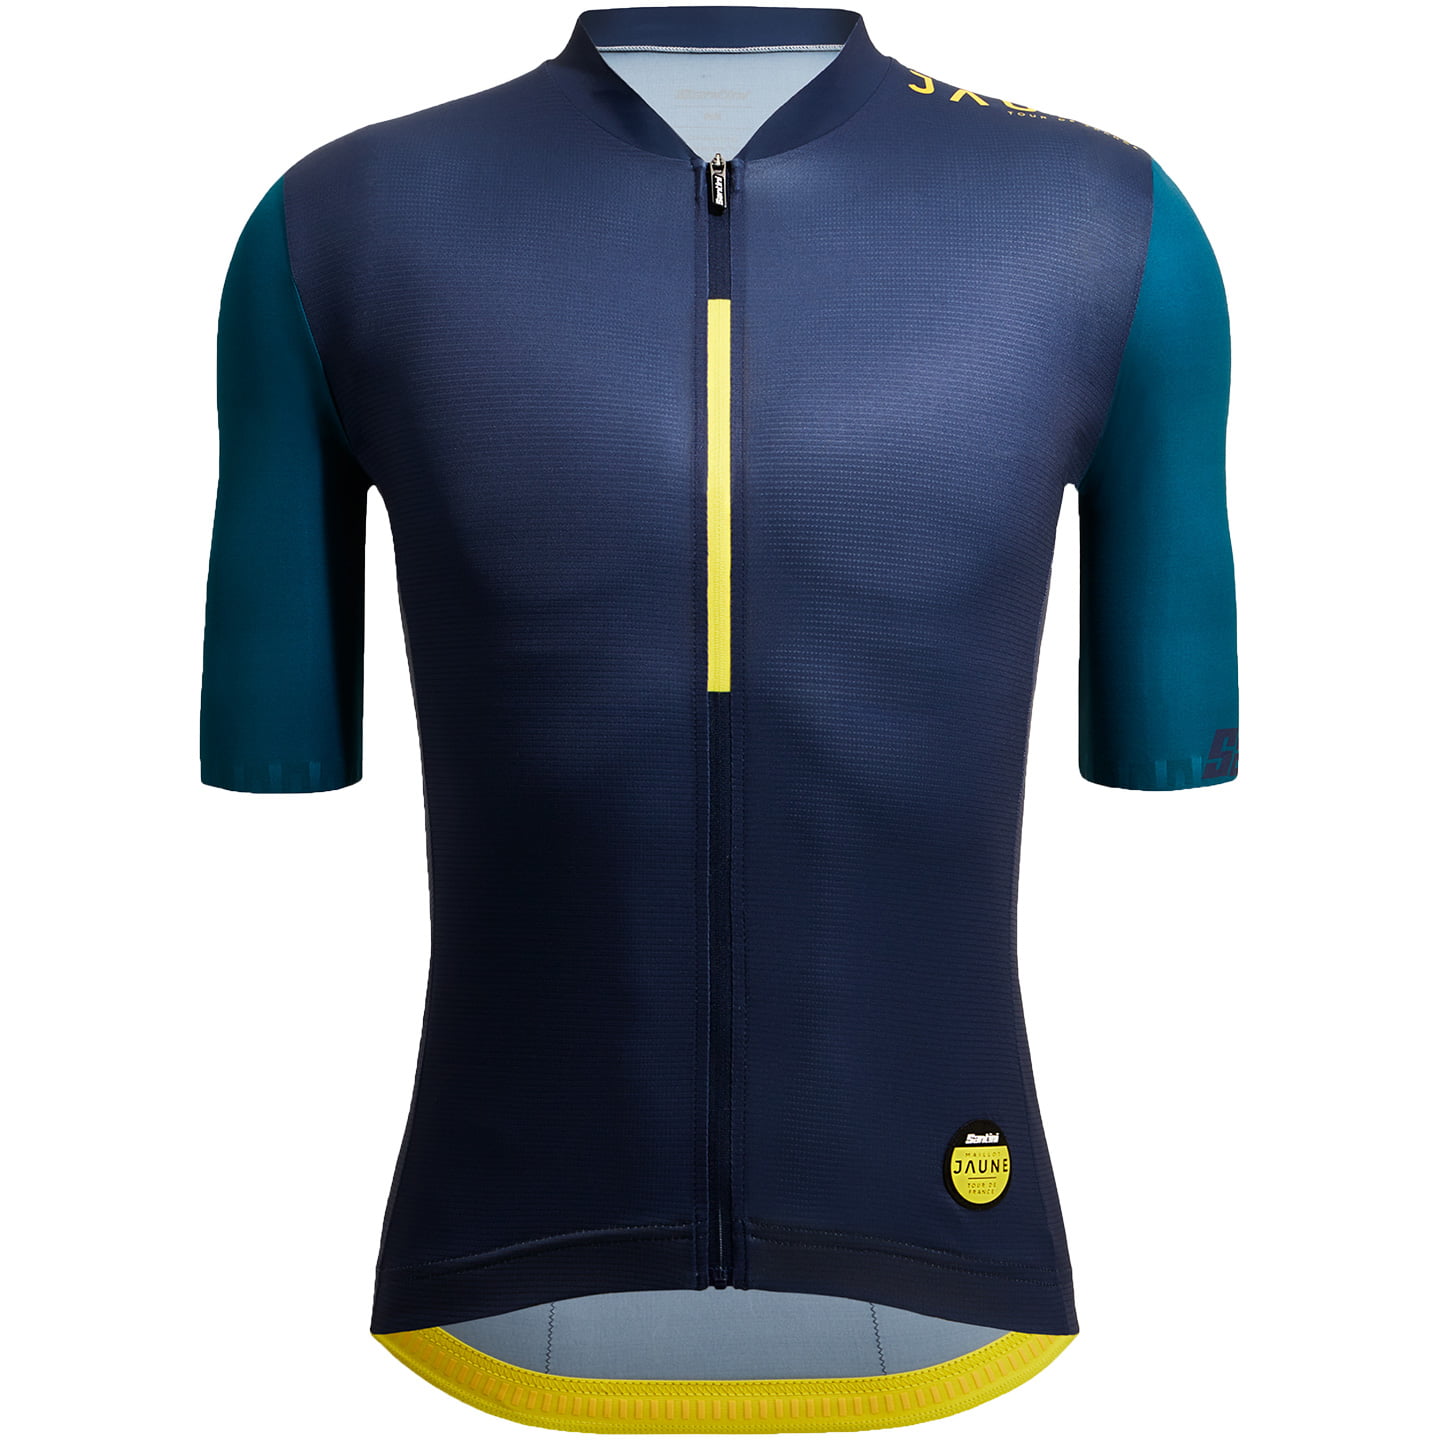 TOUR DE FRANCE Le Maillot Jaune Allez 2023 Short Sleeve Jersey, for men, size M, Cycle jersey, Cycling clothing